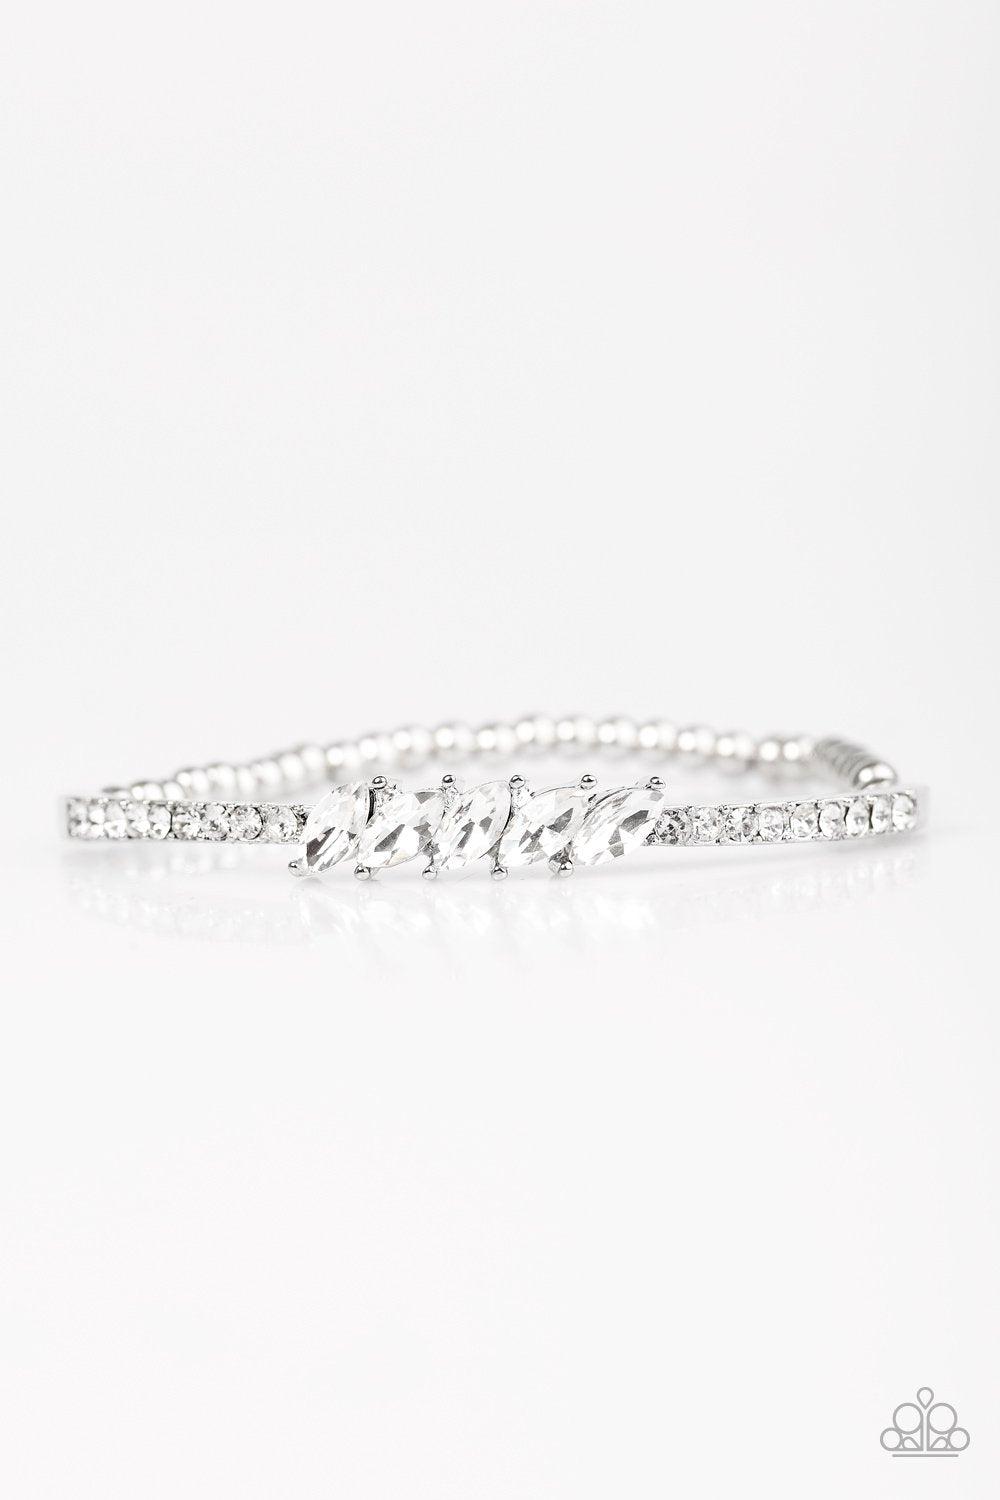 Lap of Luxury White Rhinestone Bracelet - Paparazzi Accessories-CarasShop.com - $5 Jewelry by Cara Jewels